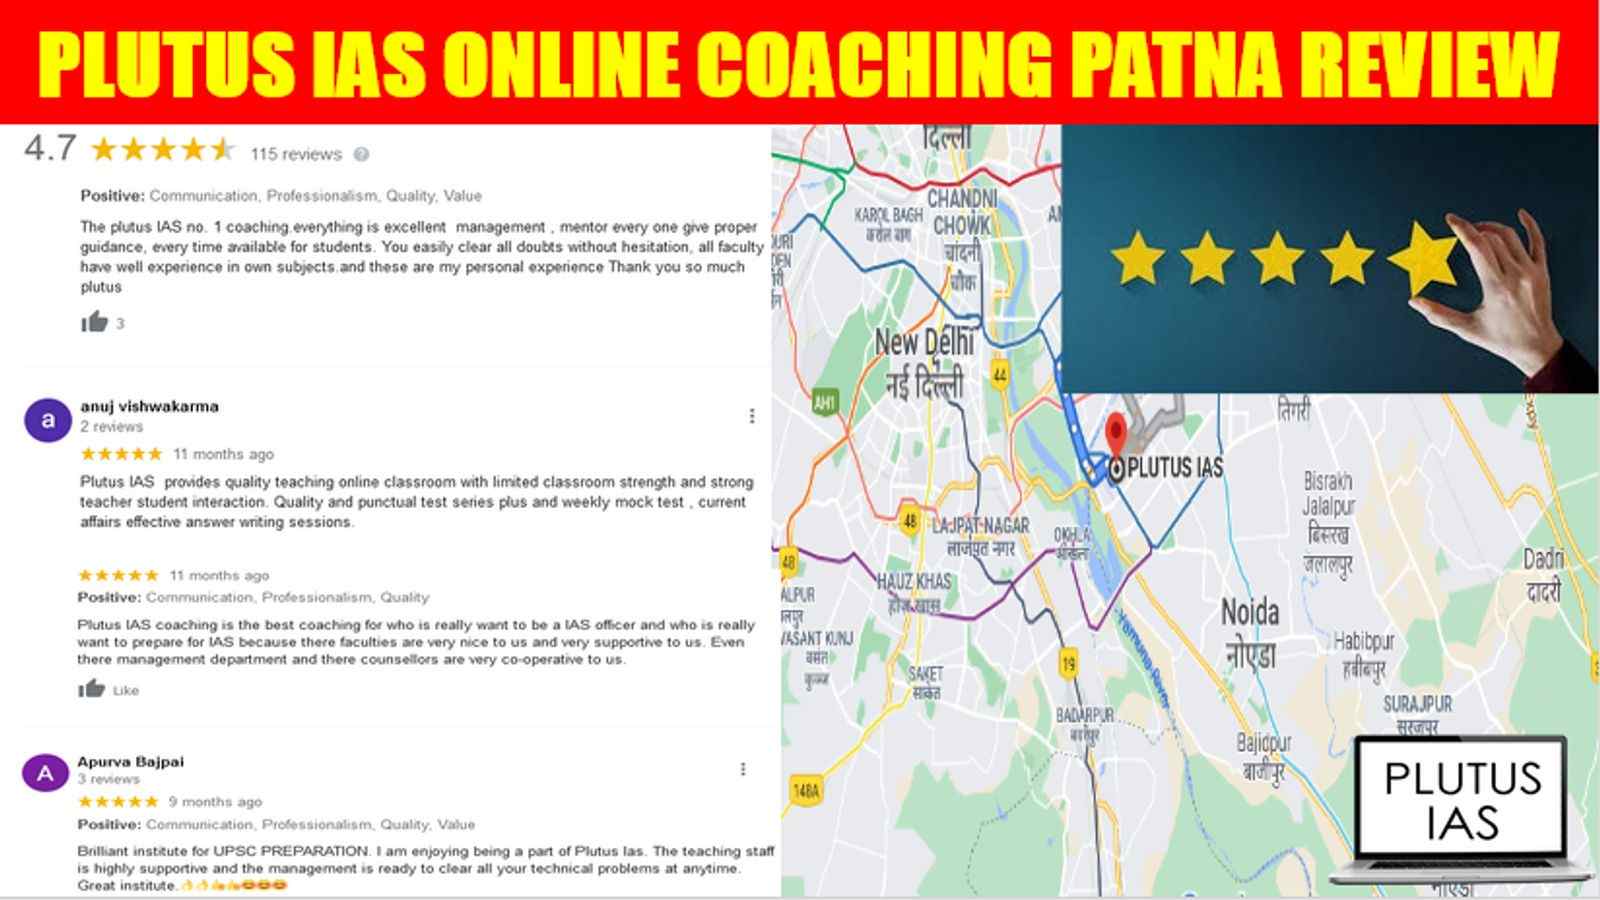 Plutus IAS Online Coaching Patna Review